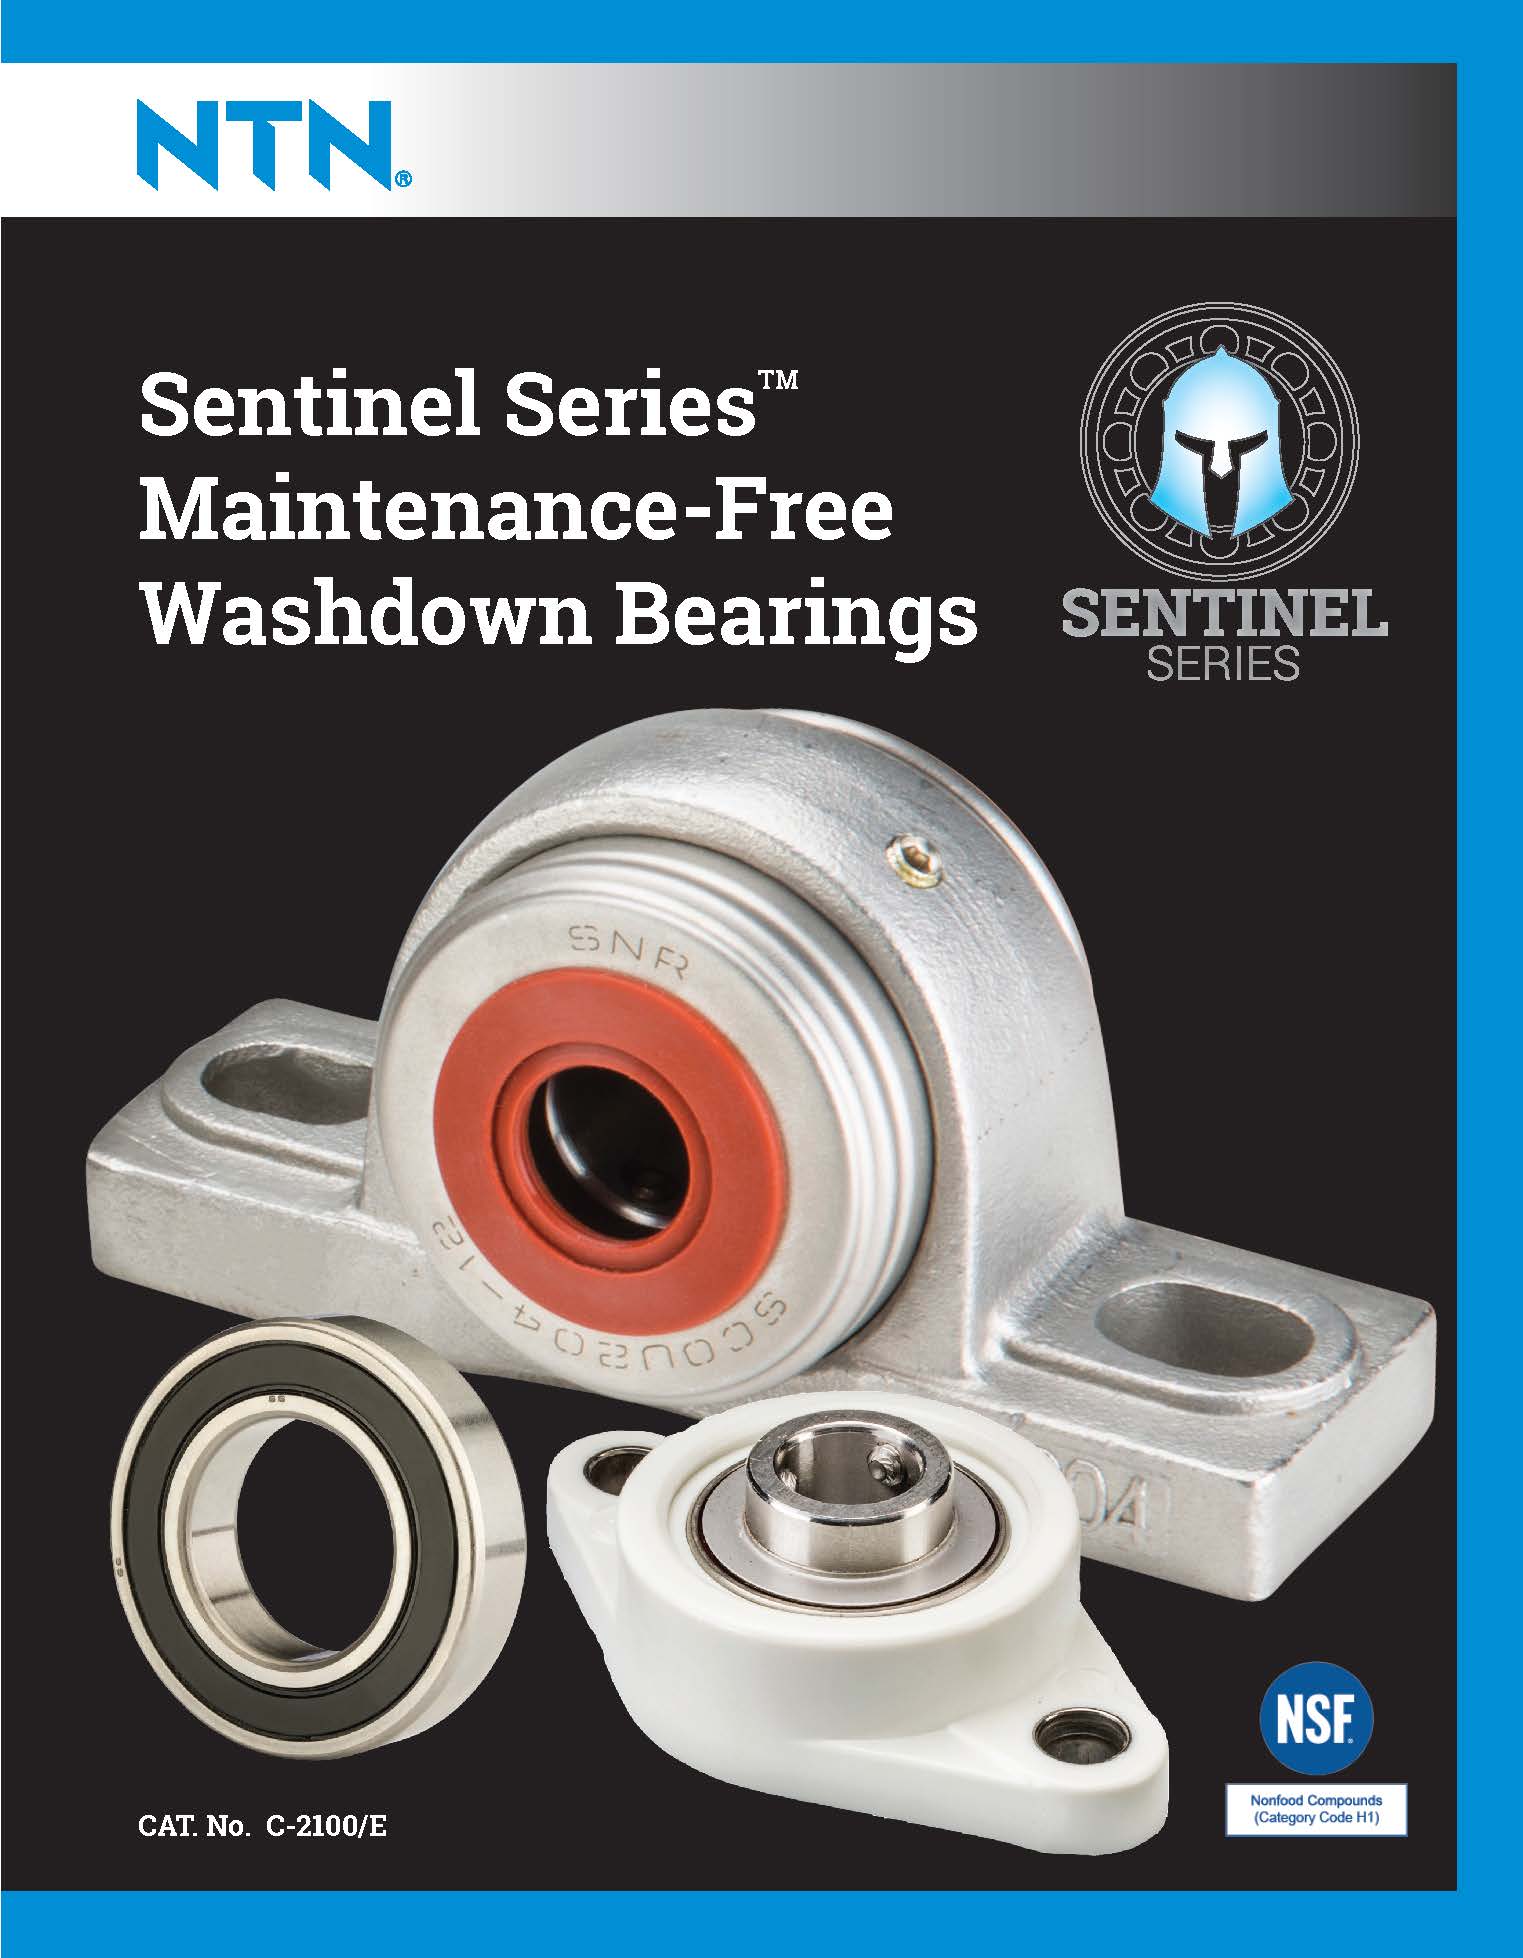 NTN Sentinel Series Catalog cover Page 01